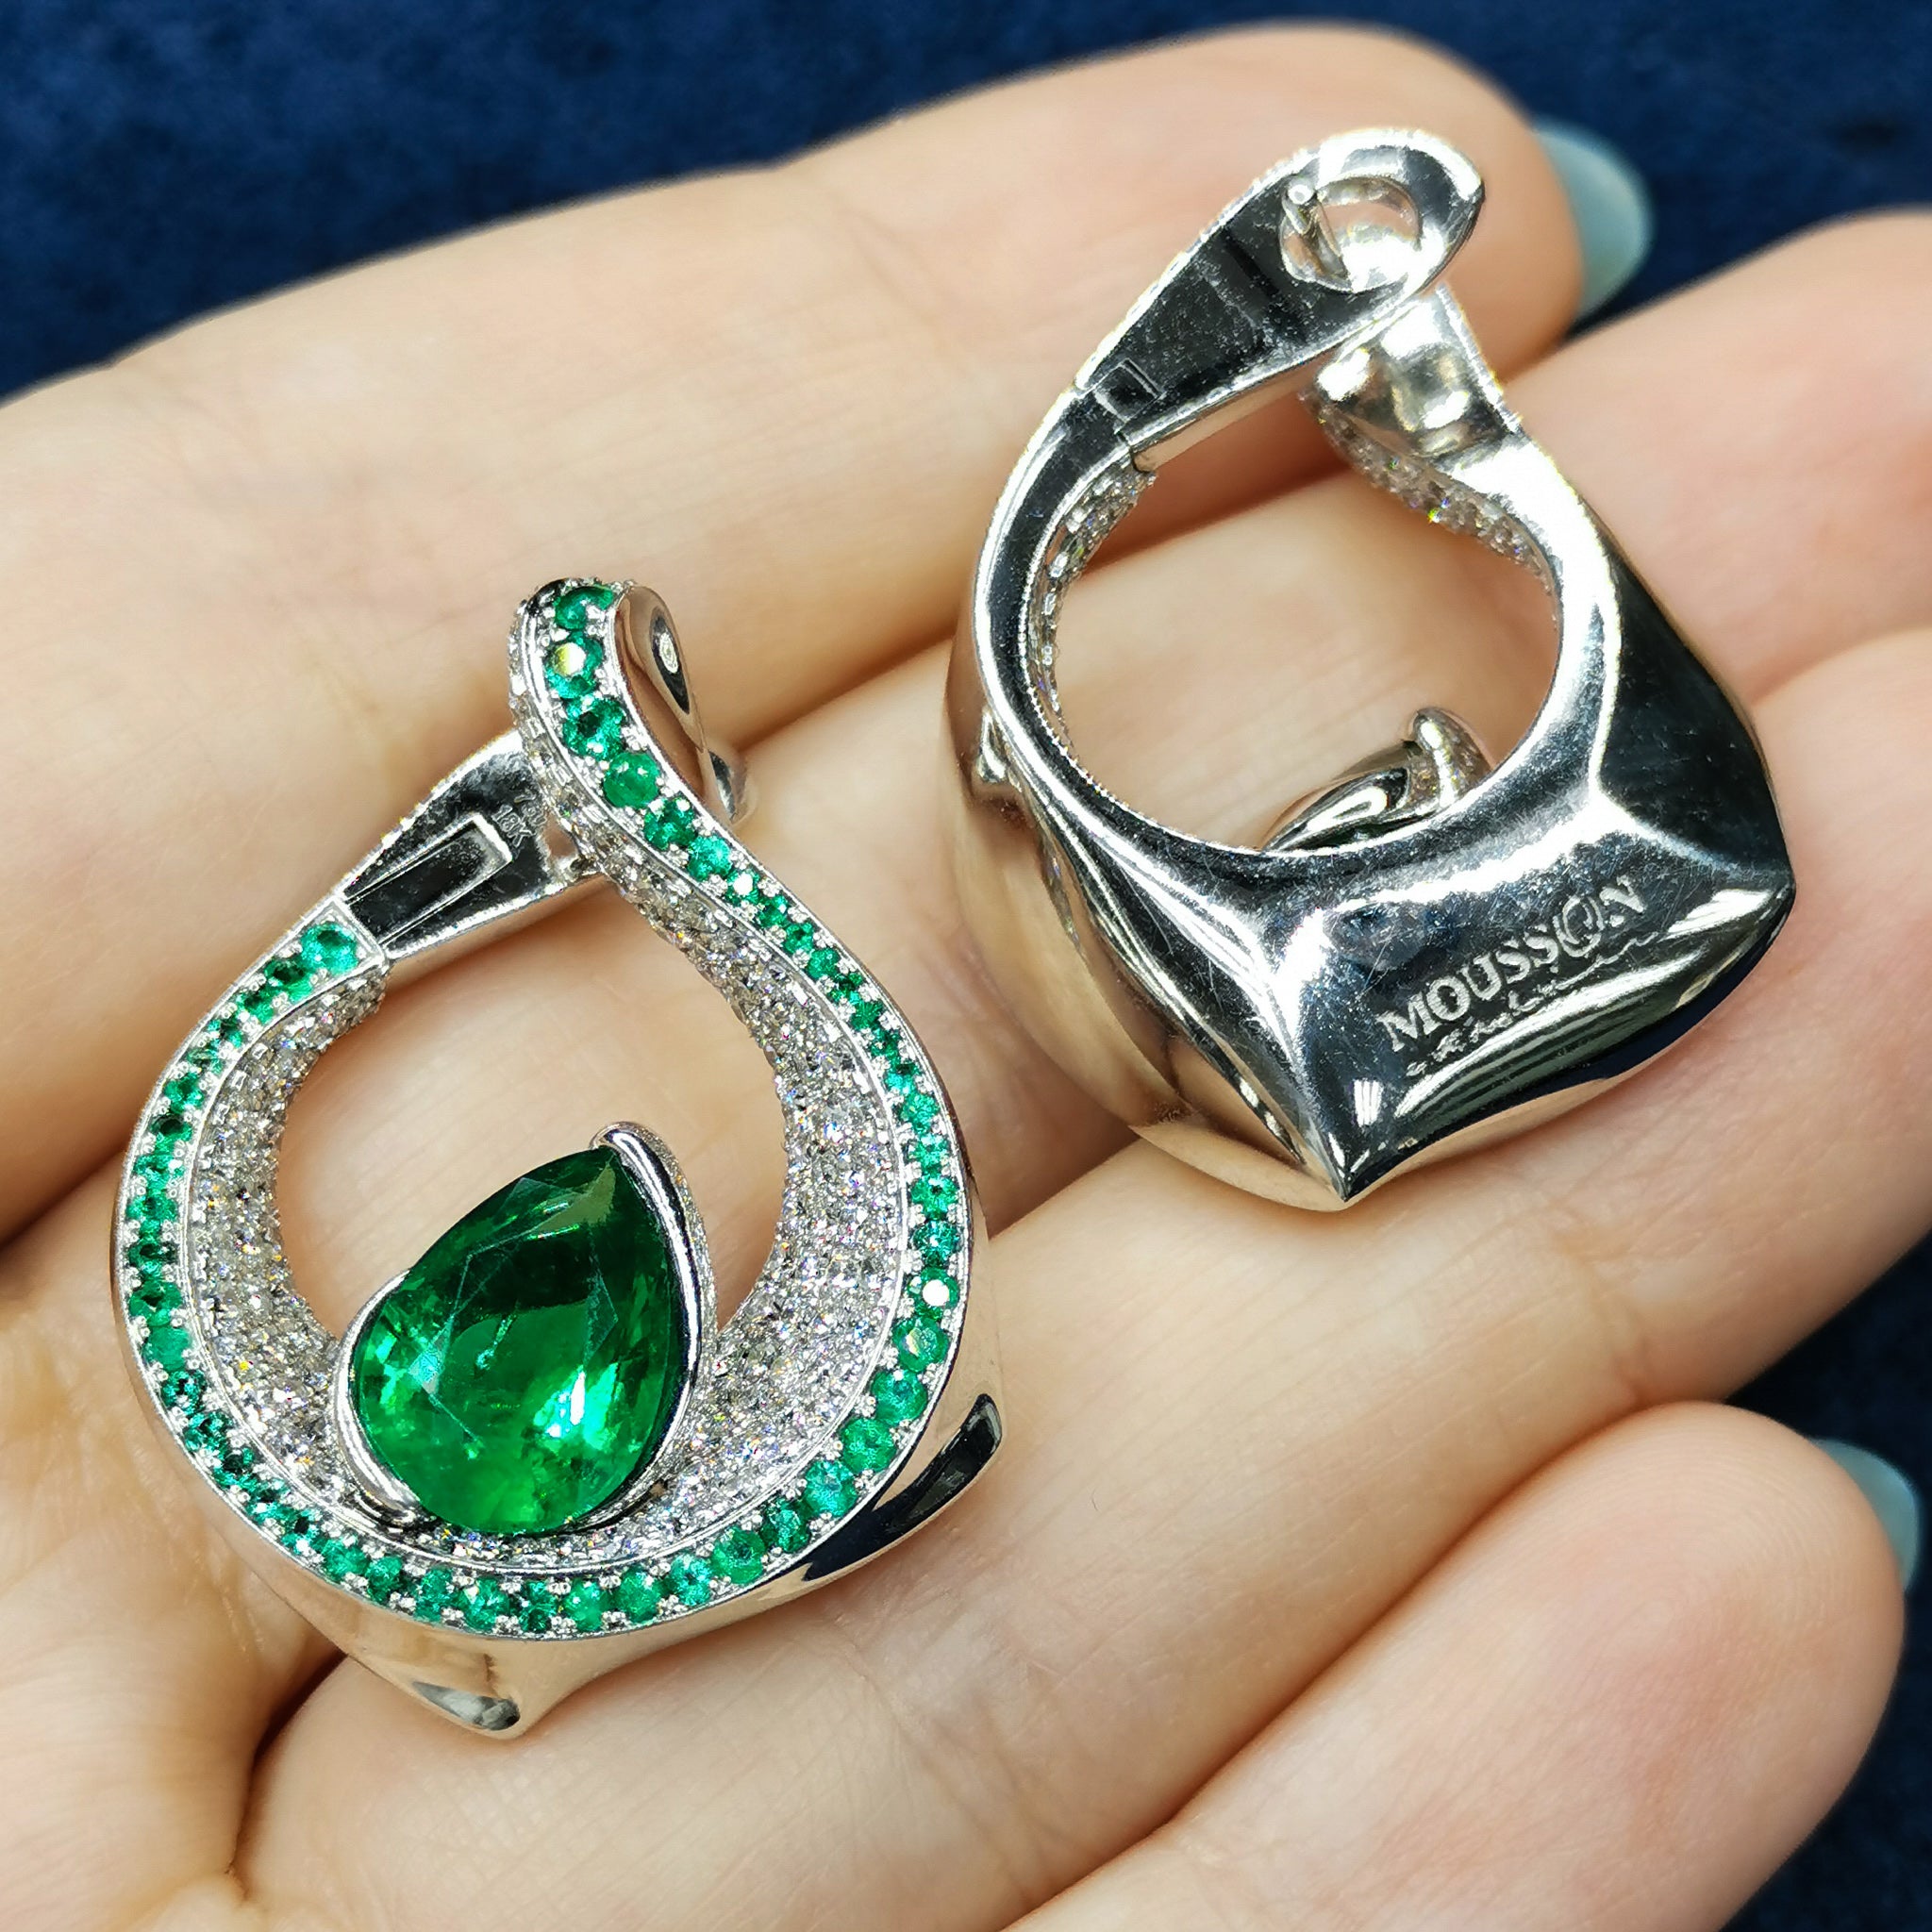 E 0120-0 18K White Gold, Emerald, Diamonds Earrings